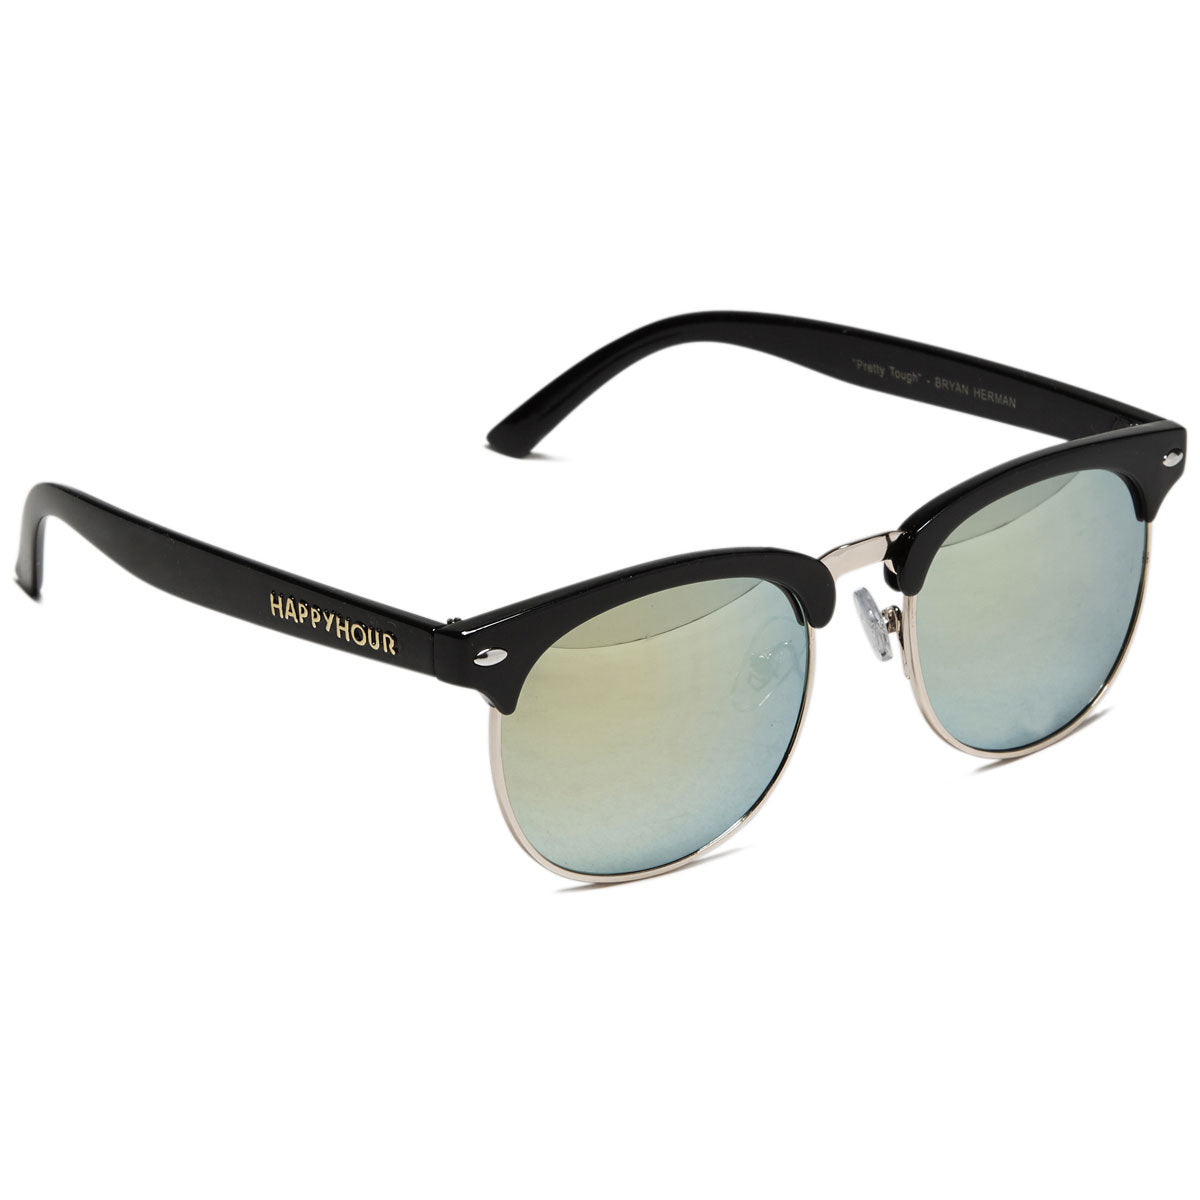 Happy Hour G2 Sunglasses - Gloss Black/Gold Mirror image 1